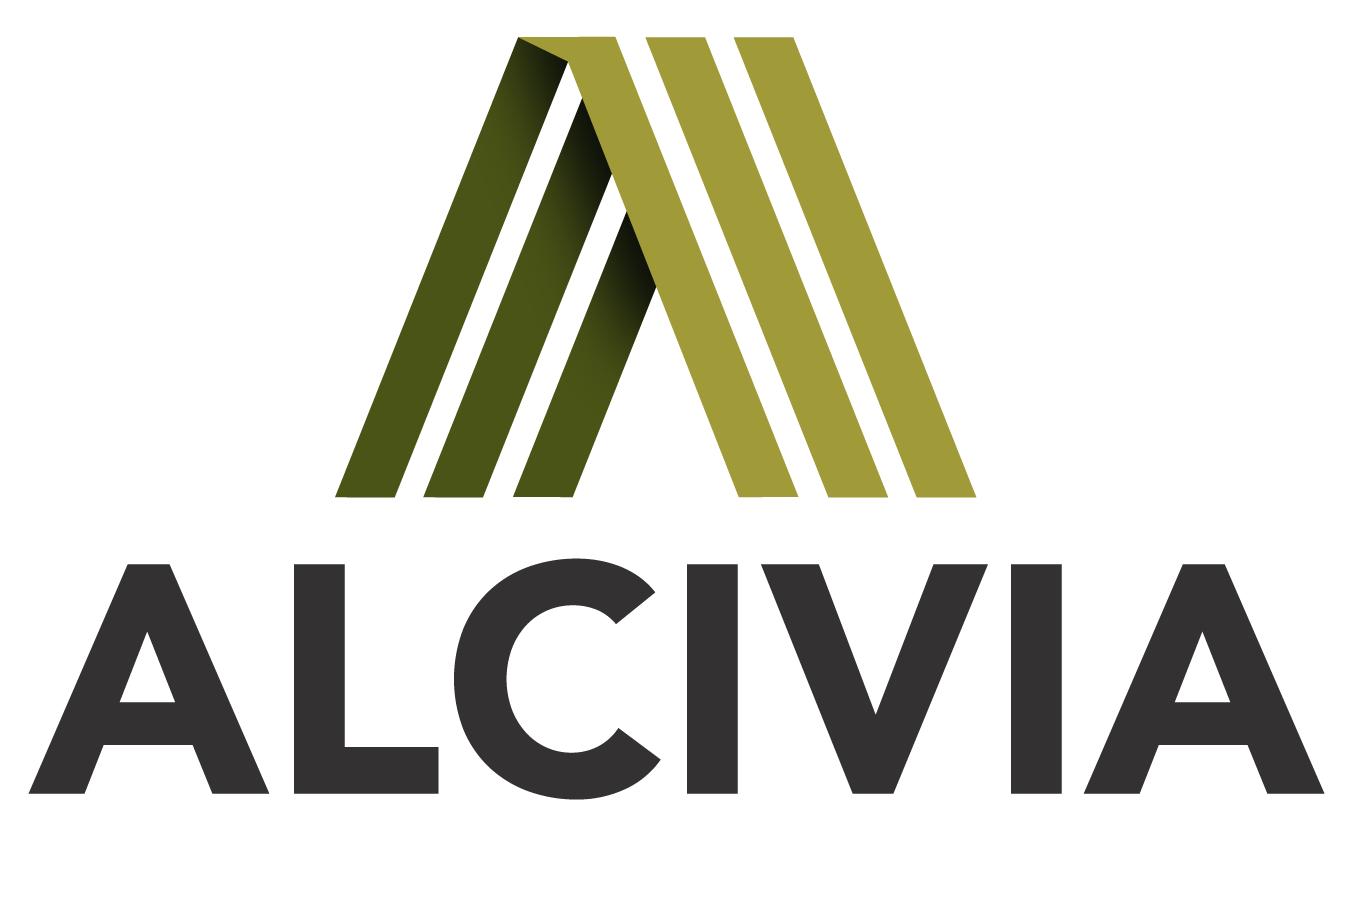 ALCIVIA Logo, Formerly Landmark Services